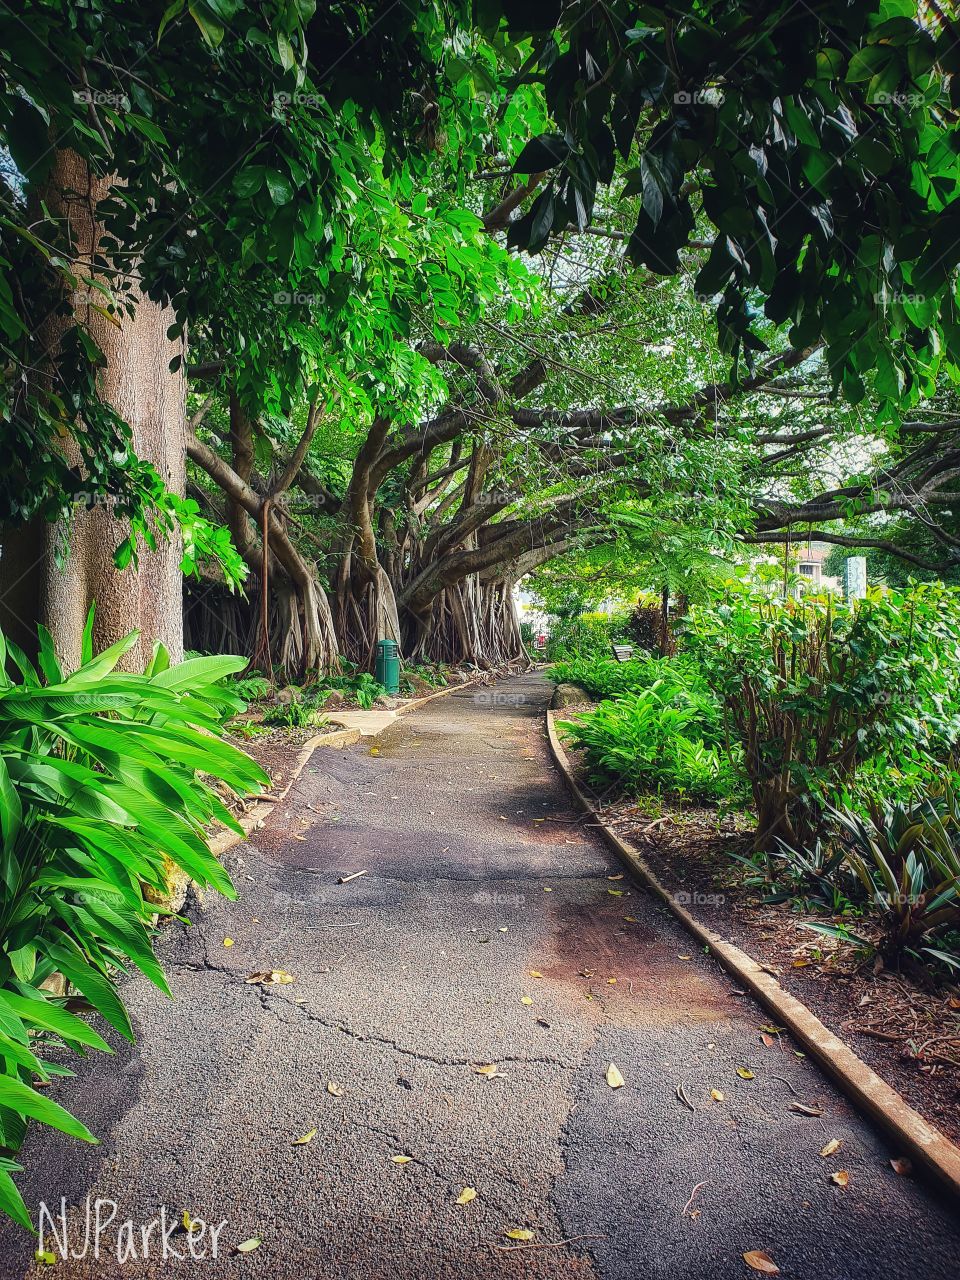 Pathway through park